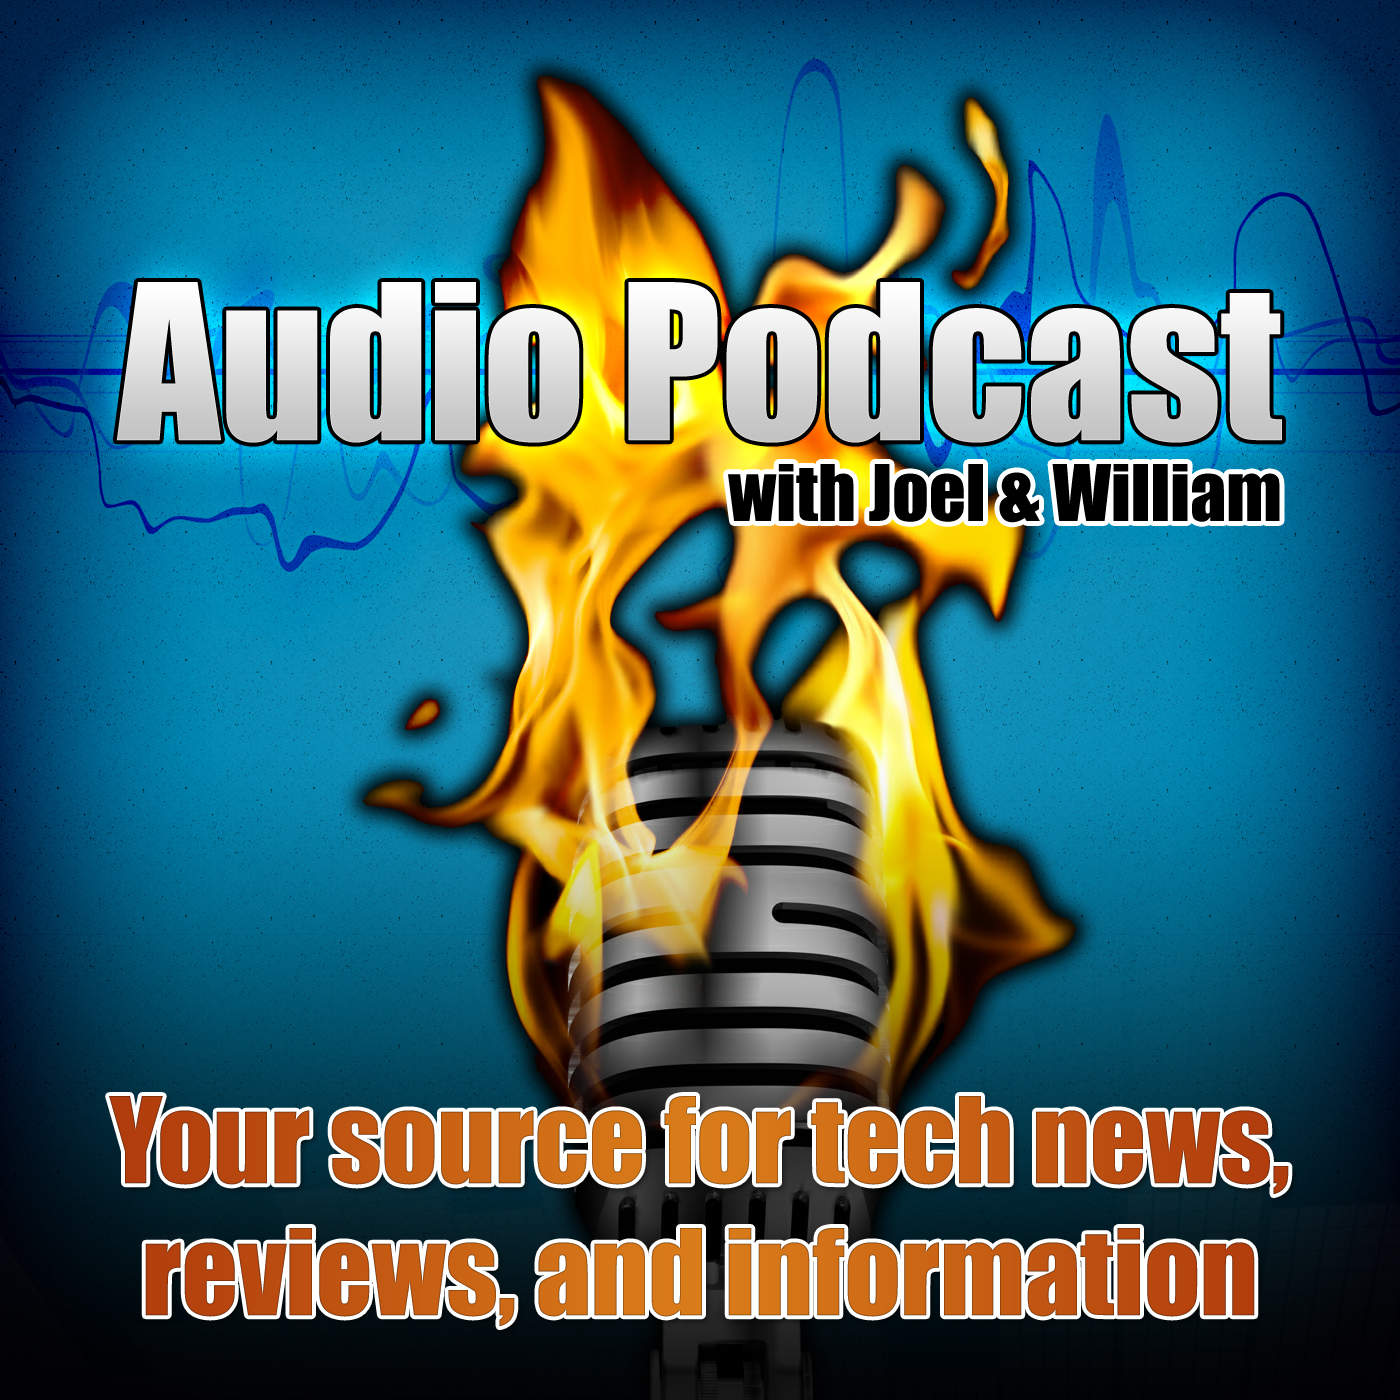 Audio Podcast Podcast Designs